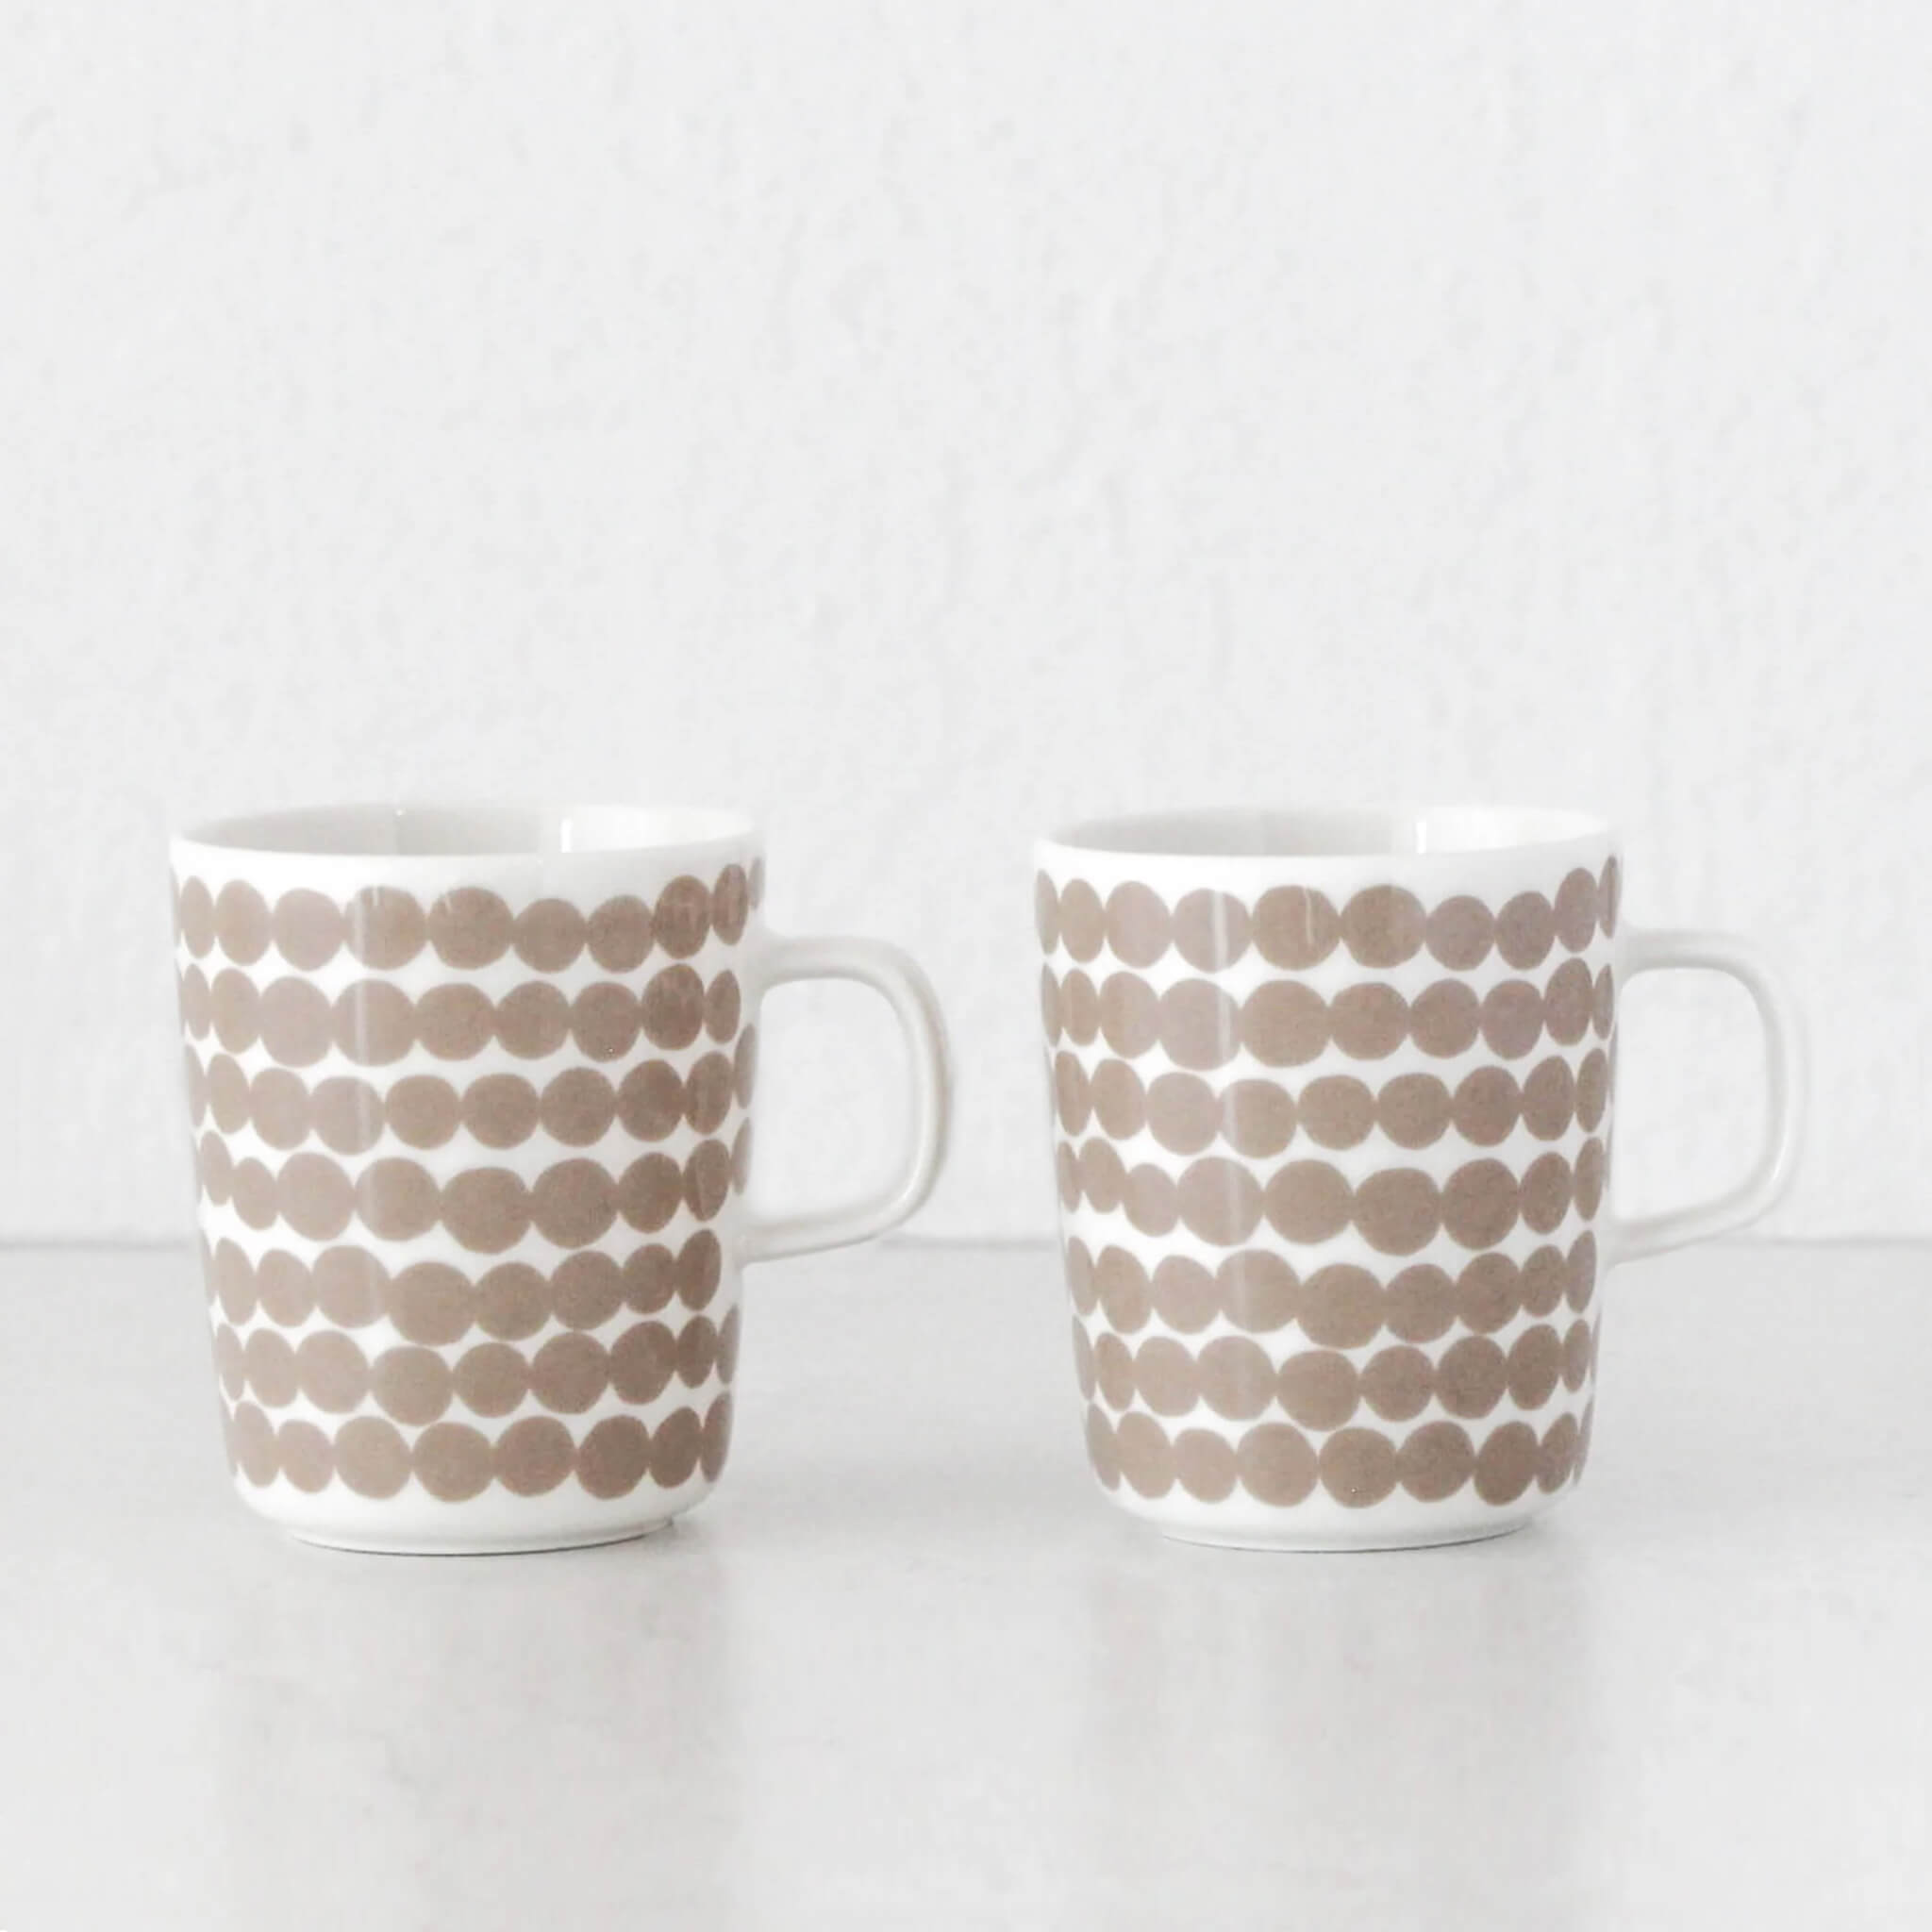 MARIMEKKO COFFEE MUGS  |  TEA CUPS